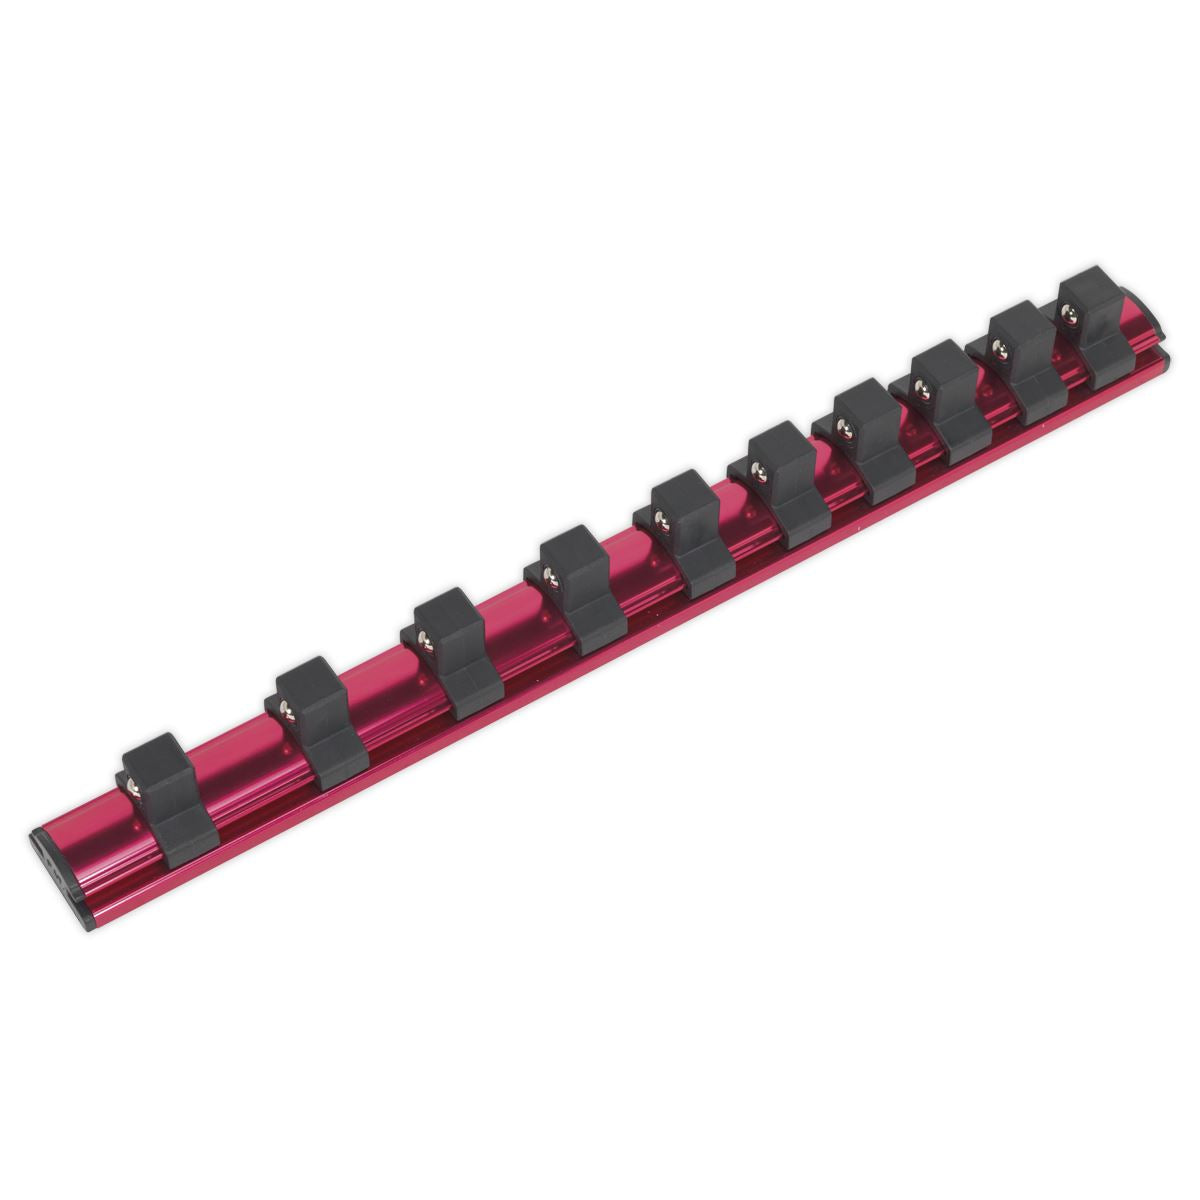 Sealey Premier Socket Retaining Rail Magnetic 1/2"Sq Drive 10 Clips